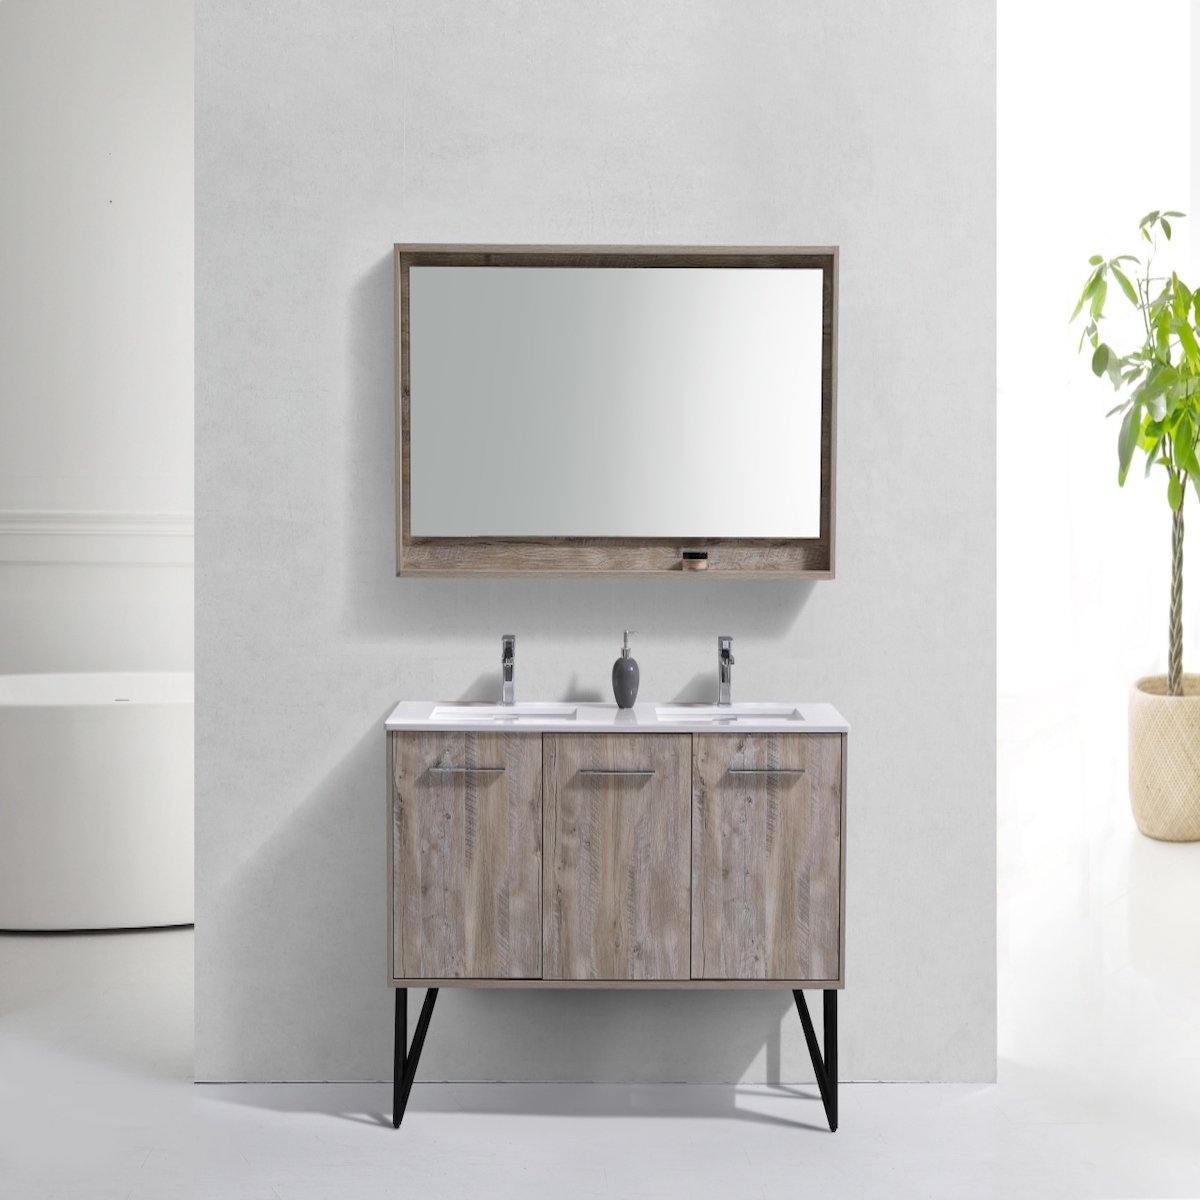 KubeBath Bosco 60" Nature Wood Freestanding Double Vanity with Quartz Countertop KB60D-NW in Bathroom #finish_nature wood